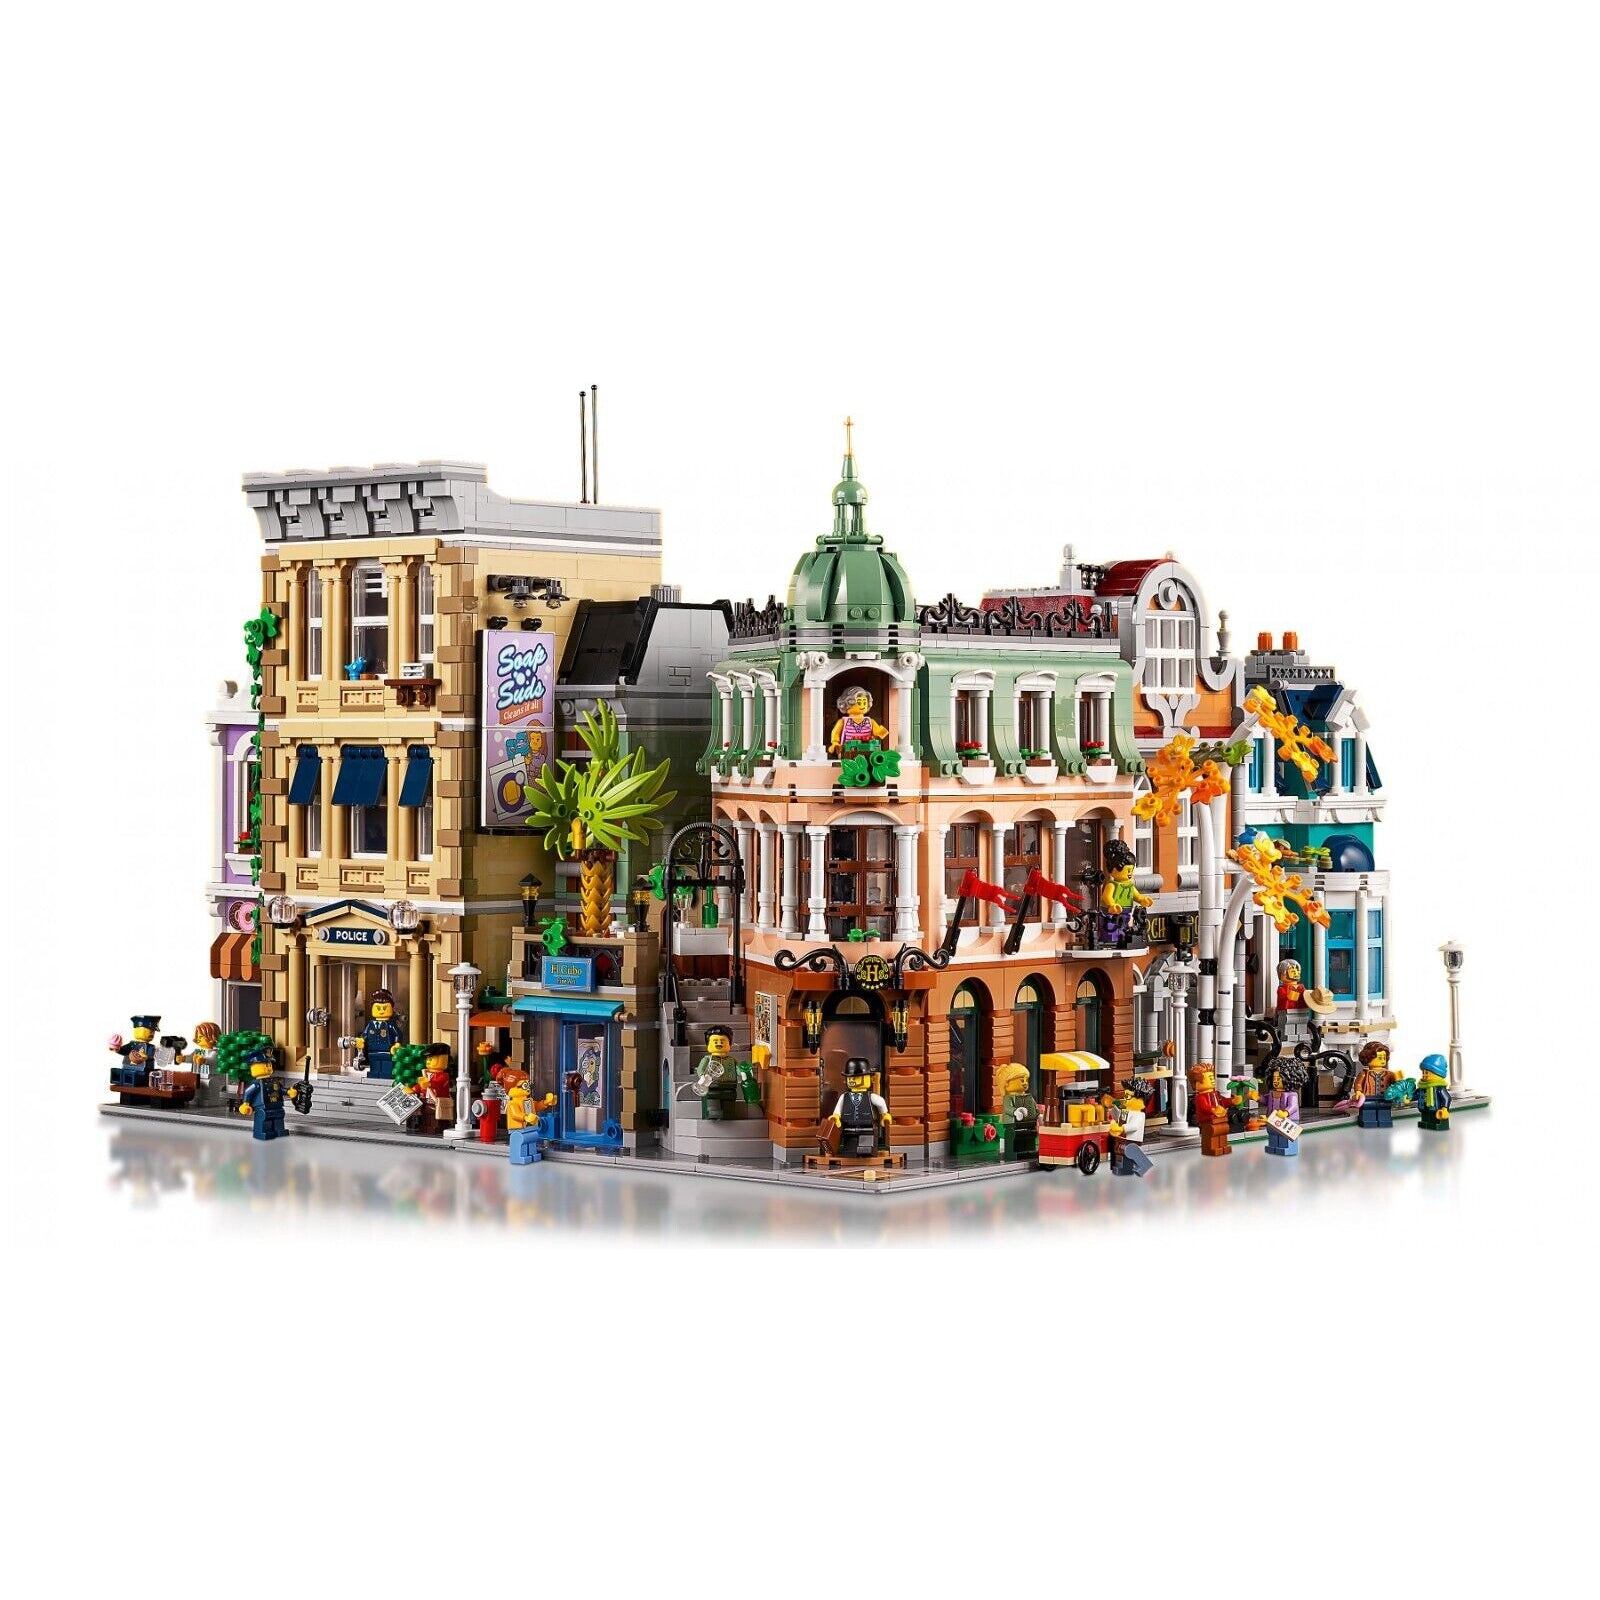 Lego 10297 Boutique Hotel